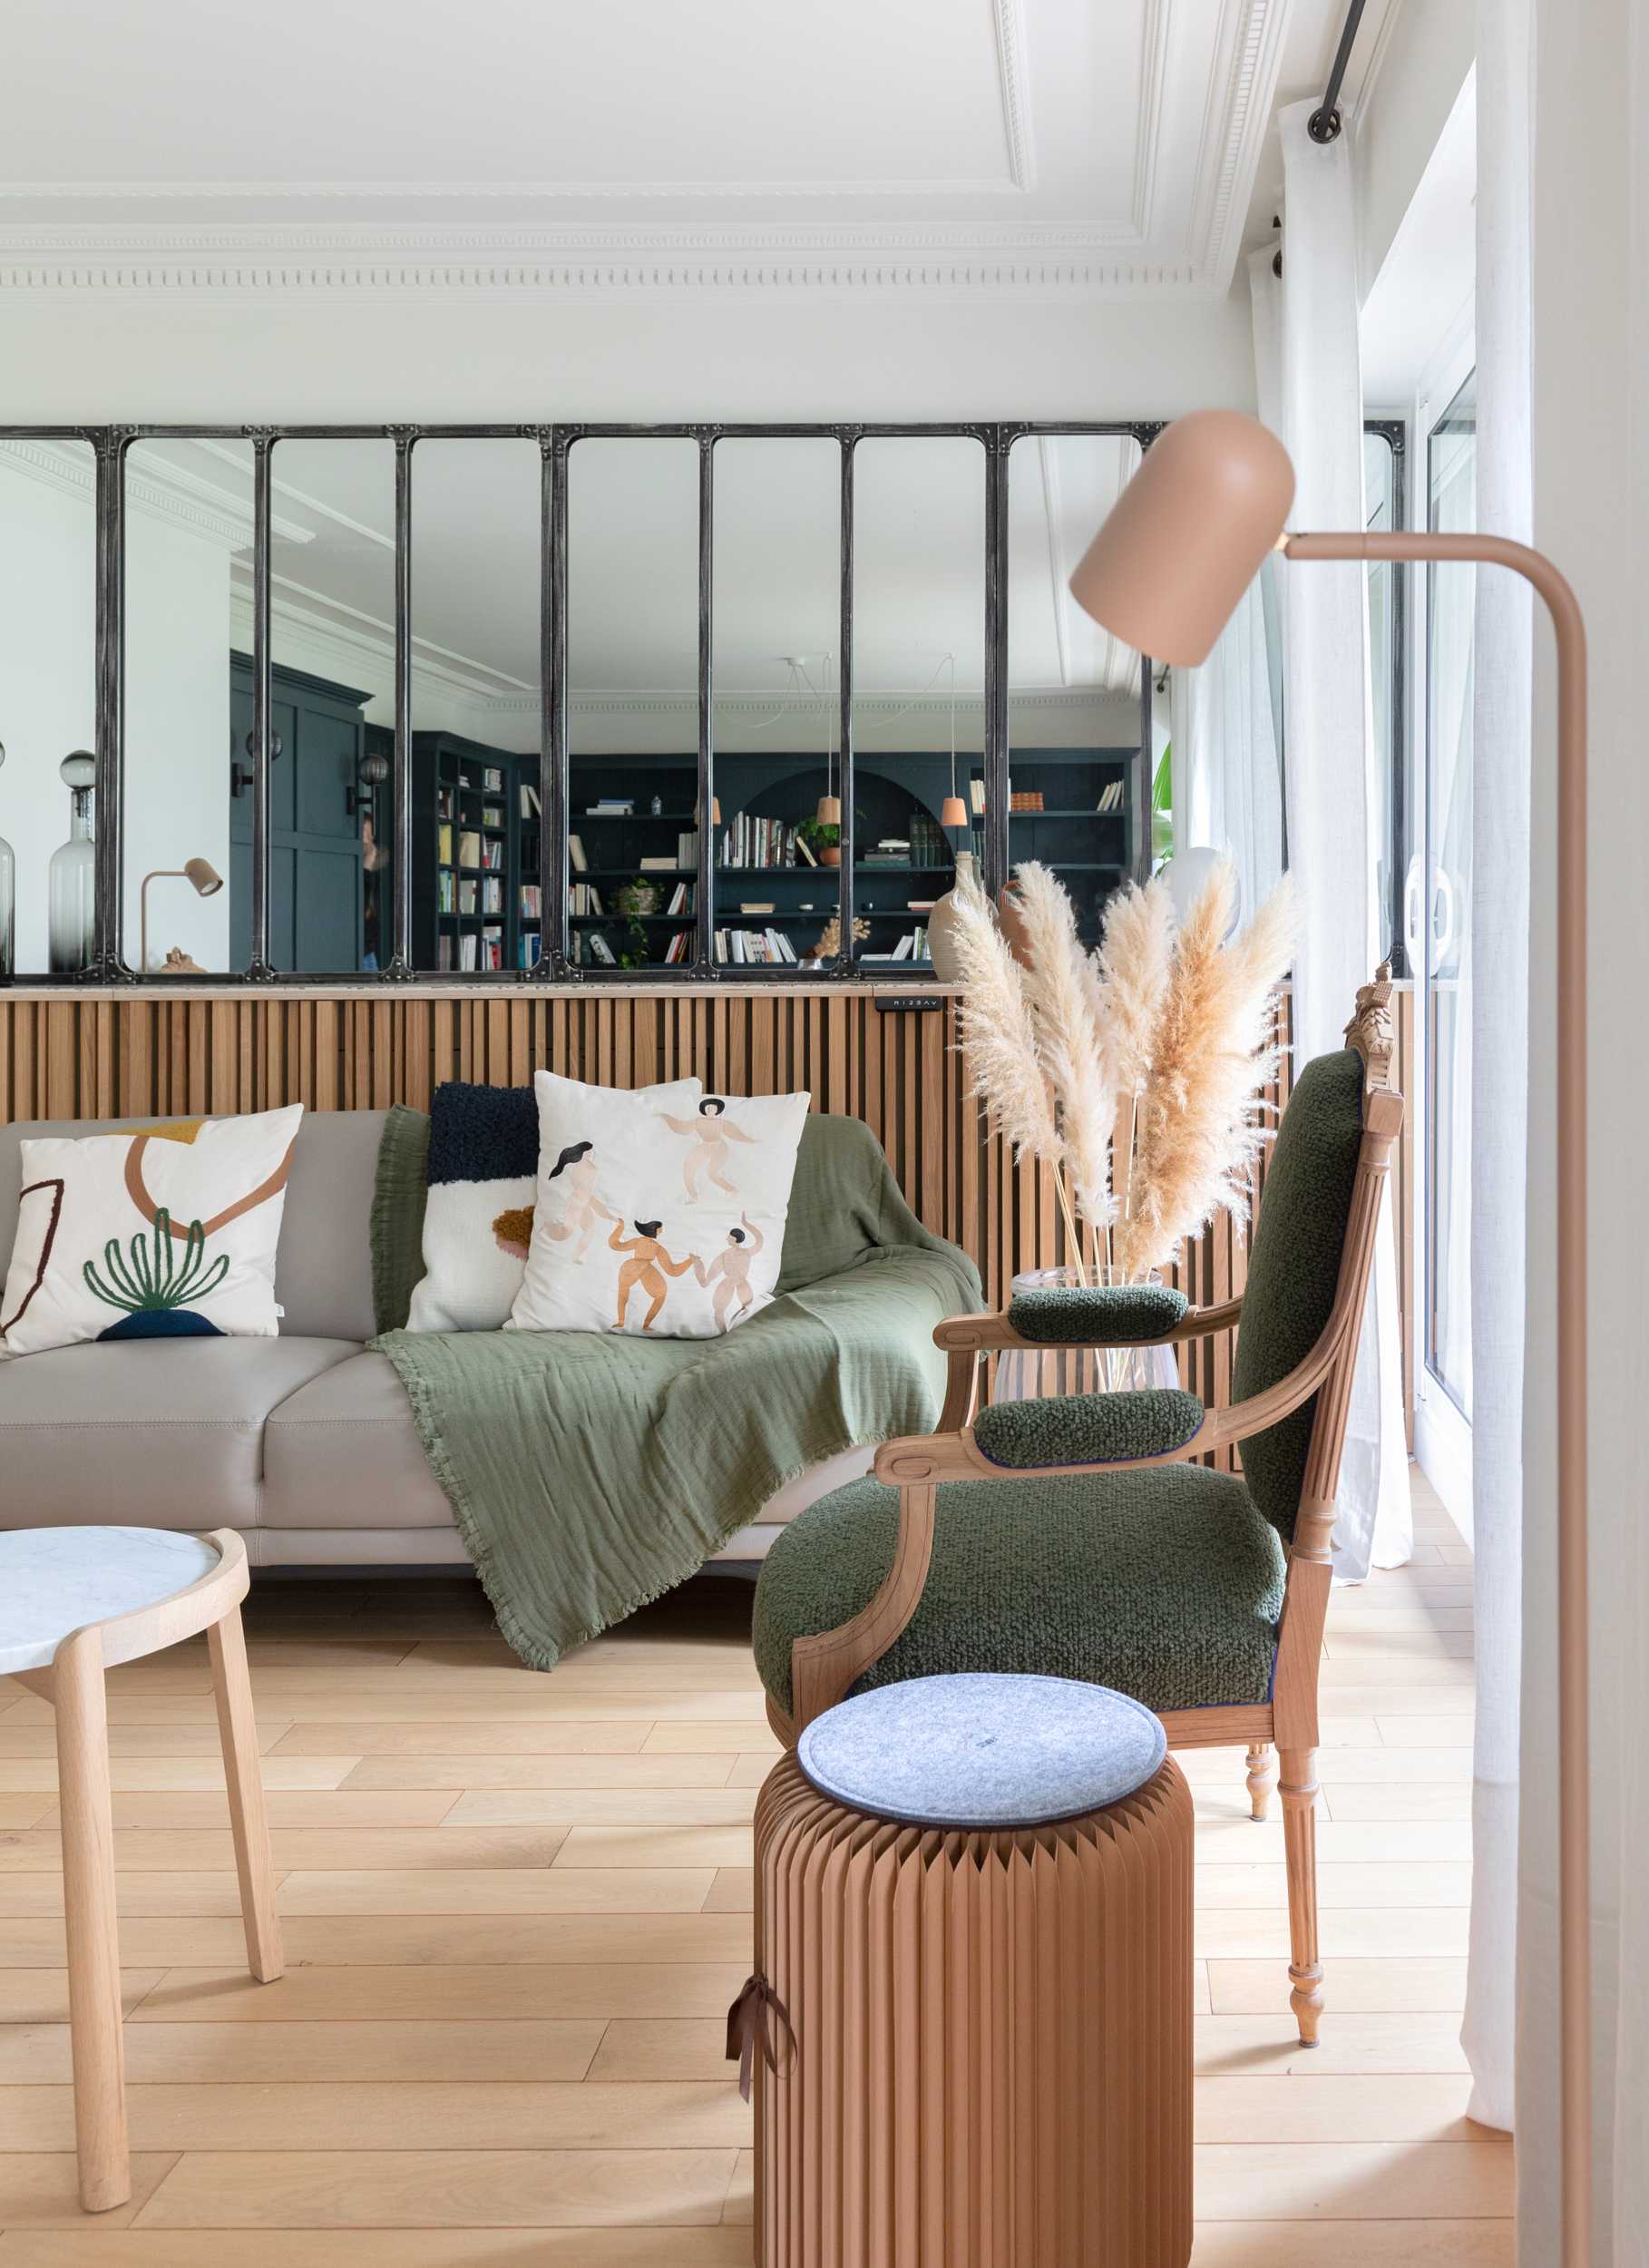 An interior designer renovates an old apartment in Toulon